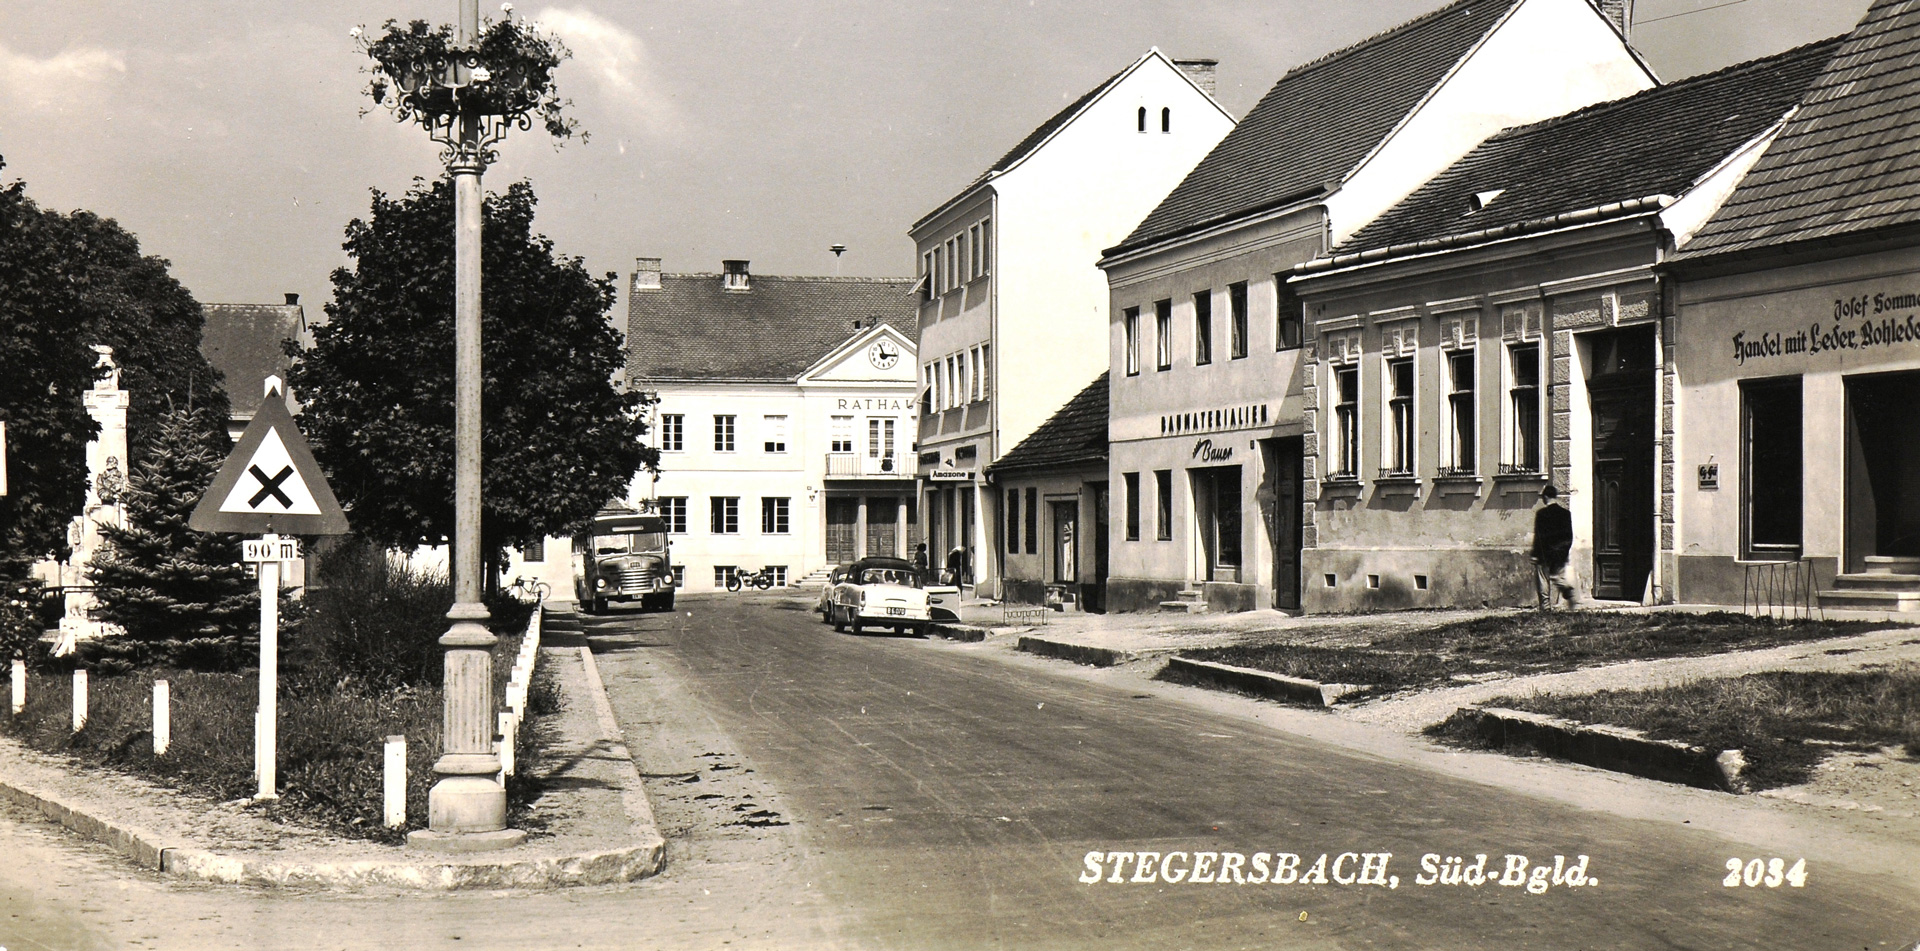 (c) Momentothek-stegersbach.at